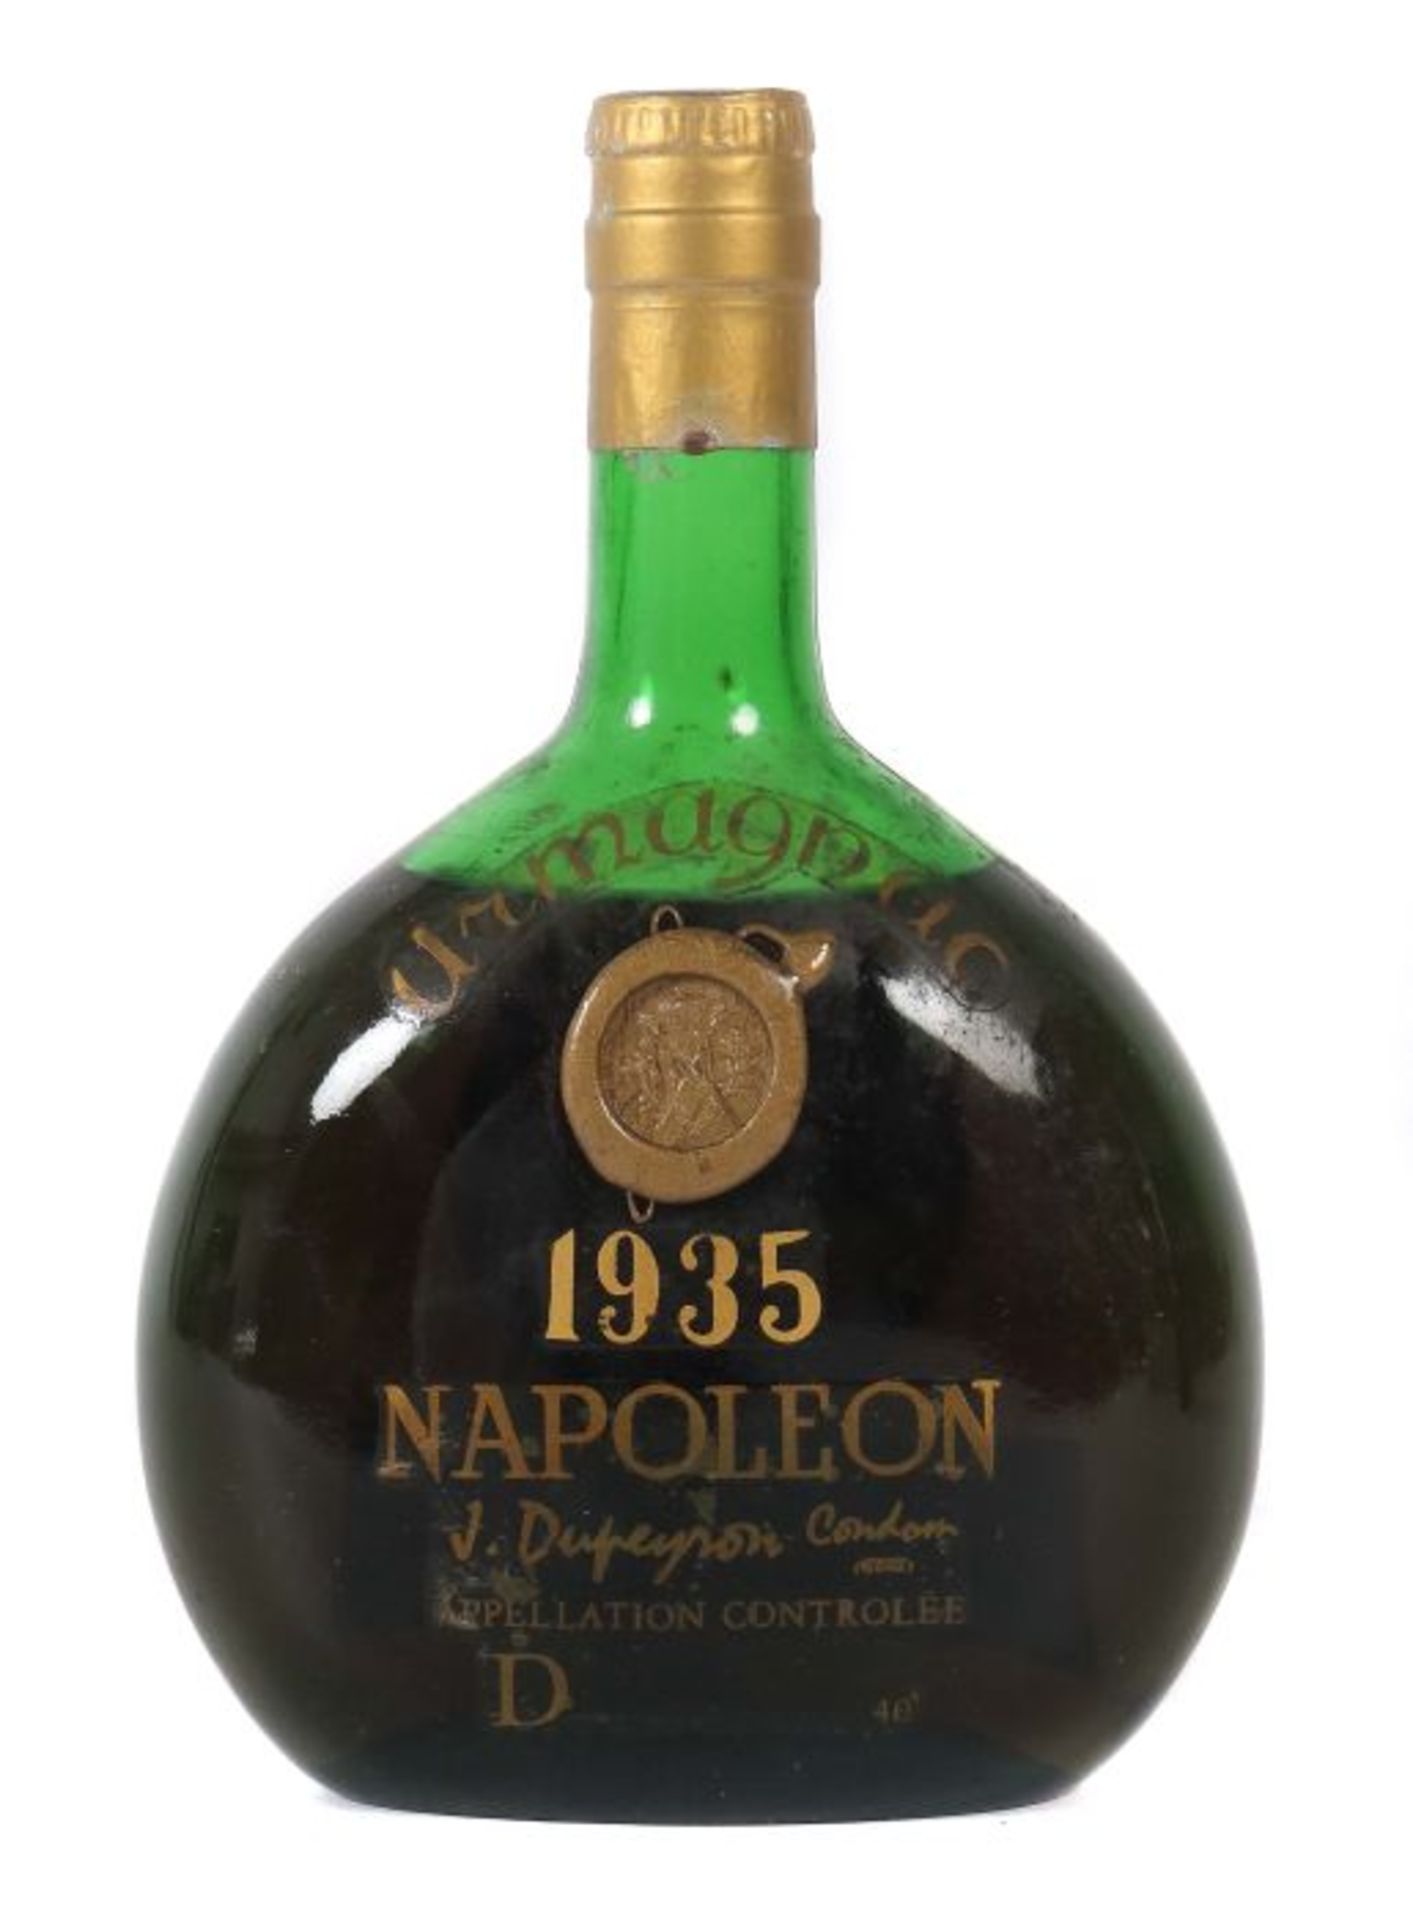 ArmagnacNapoleon, J. Dupeyron Condom (Gers), Flasche in Bocksbeutelform, 40% vol., 0,7 l.- - -25.